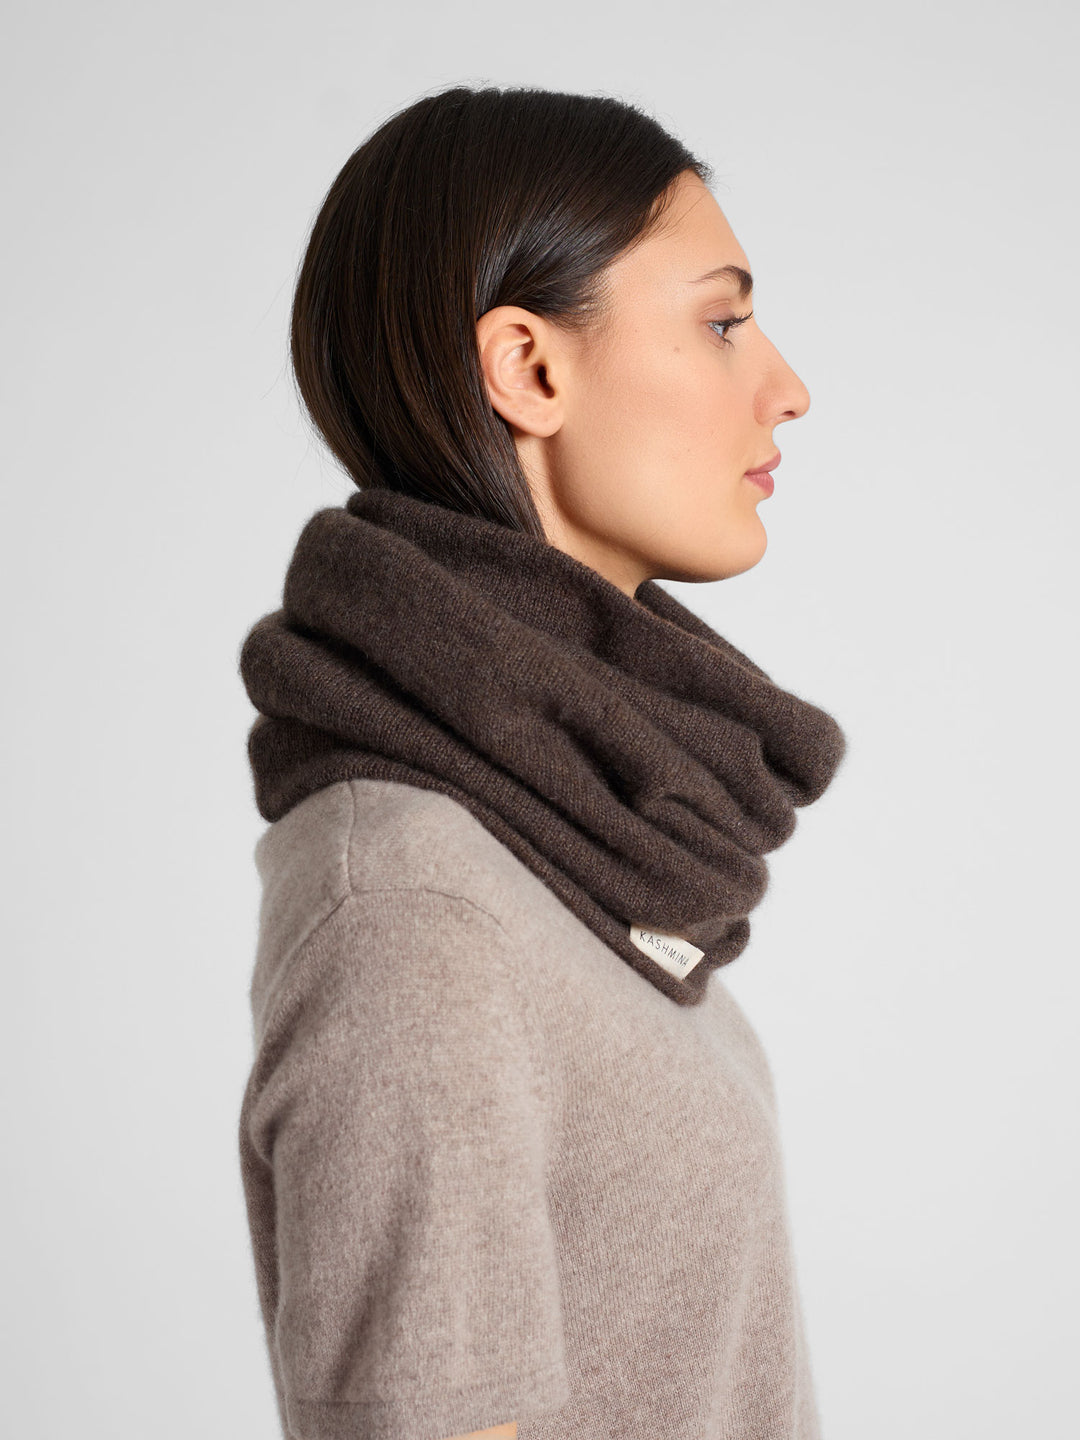 Cashmere snood / scarf "Eida" in 100% pure cashmere. Scandinavian design by Kashmina. Color: Dark Brown.